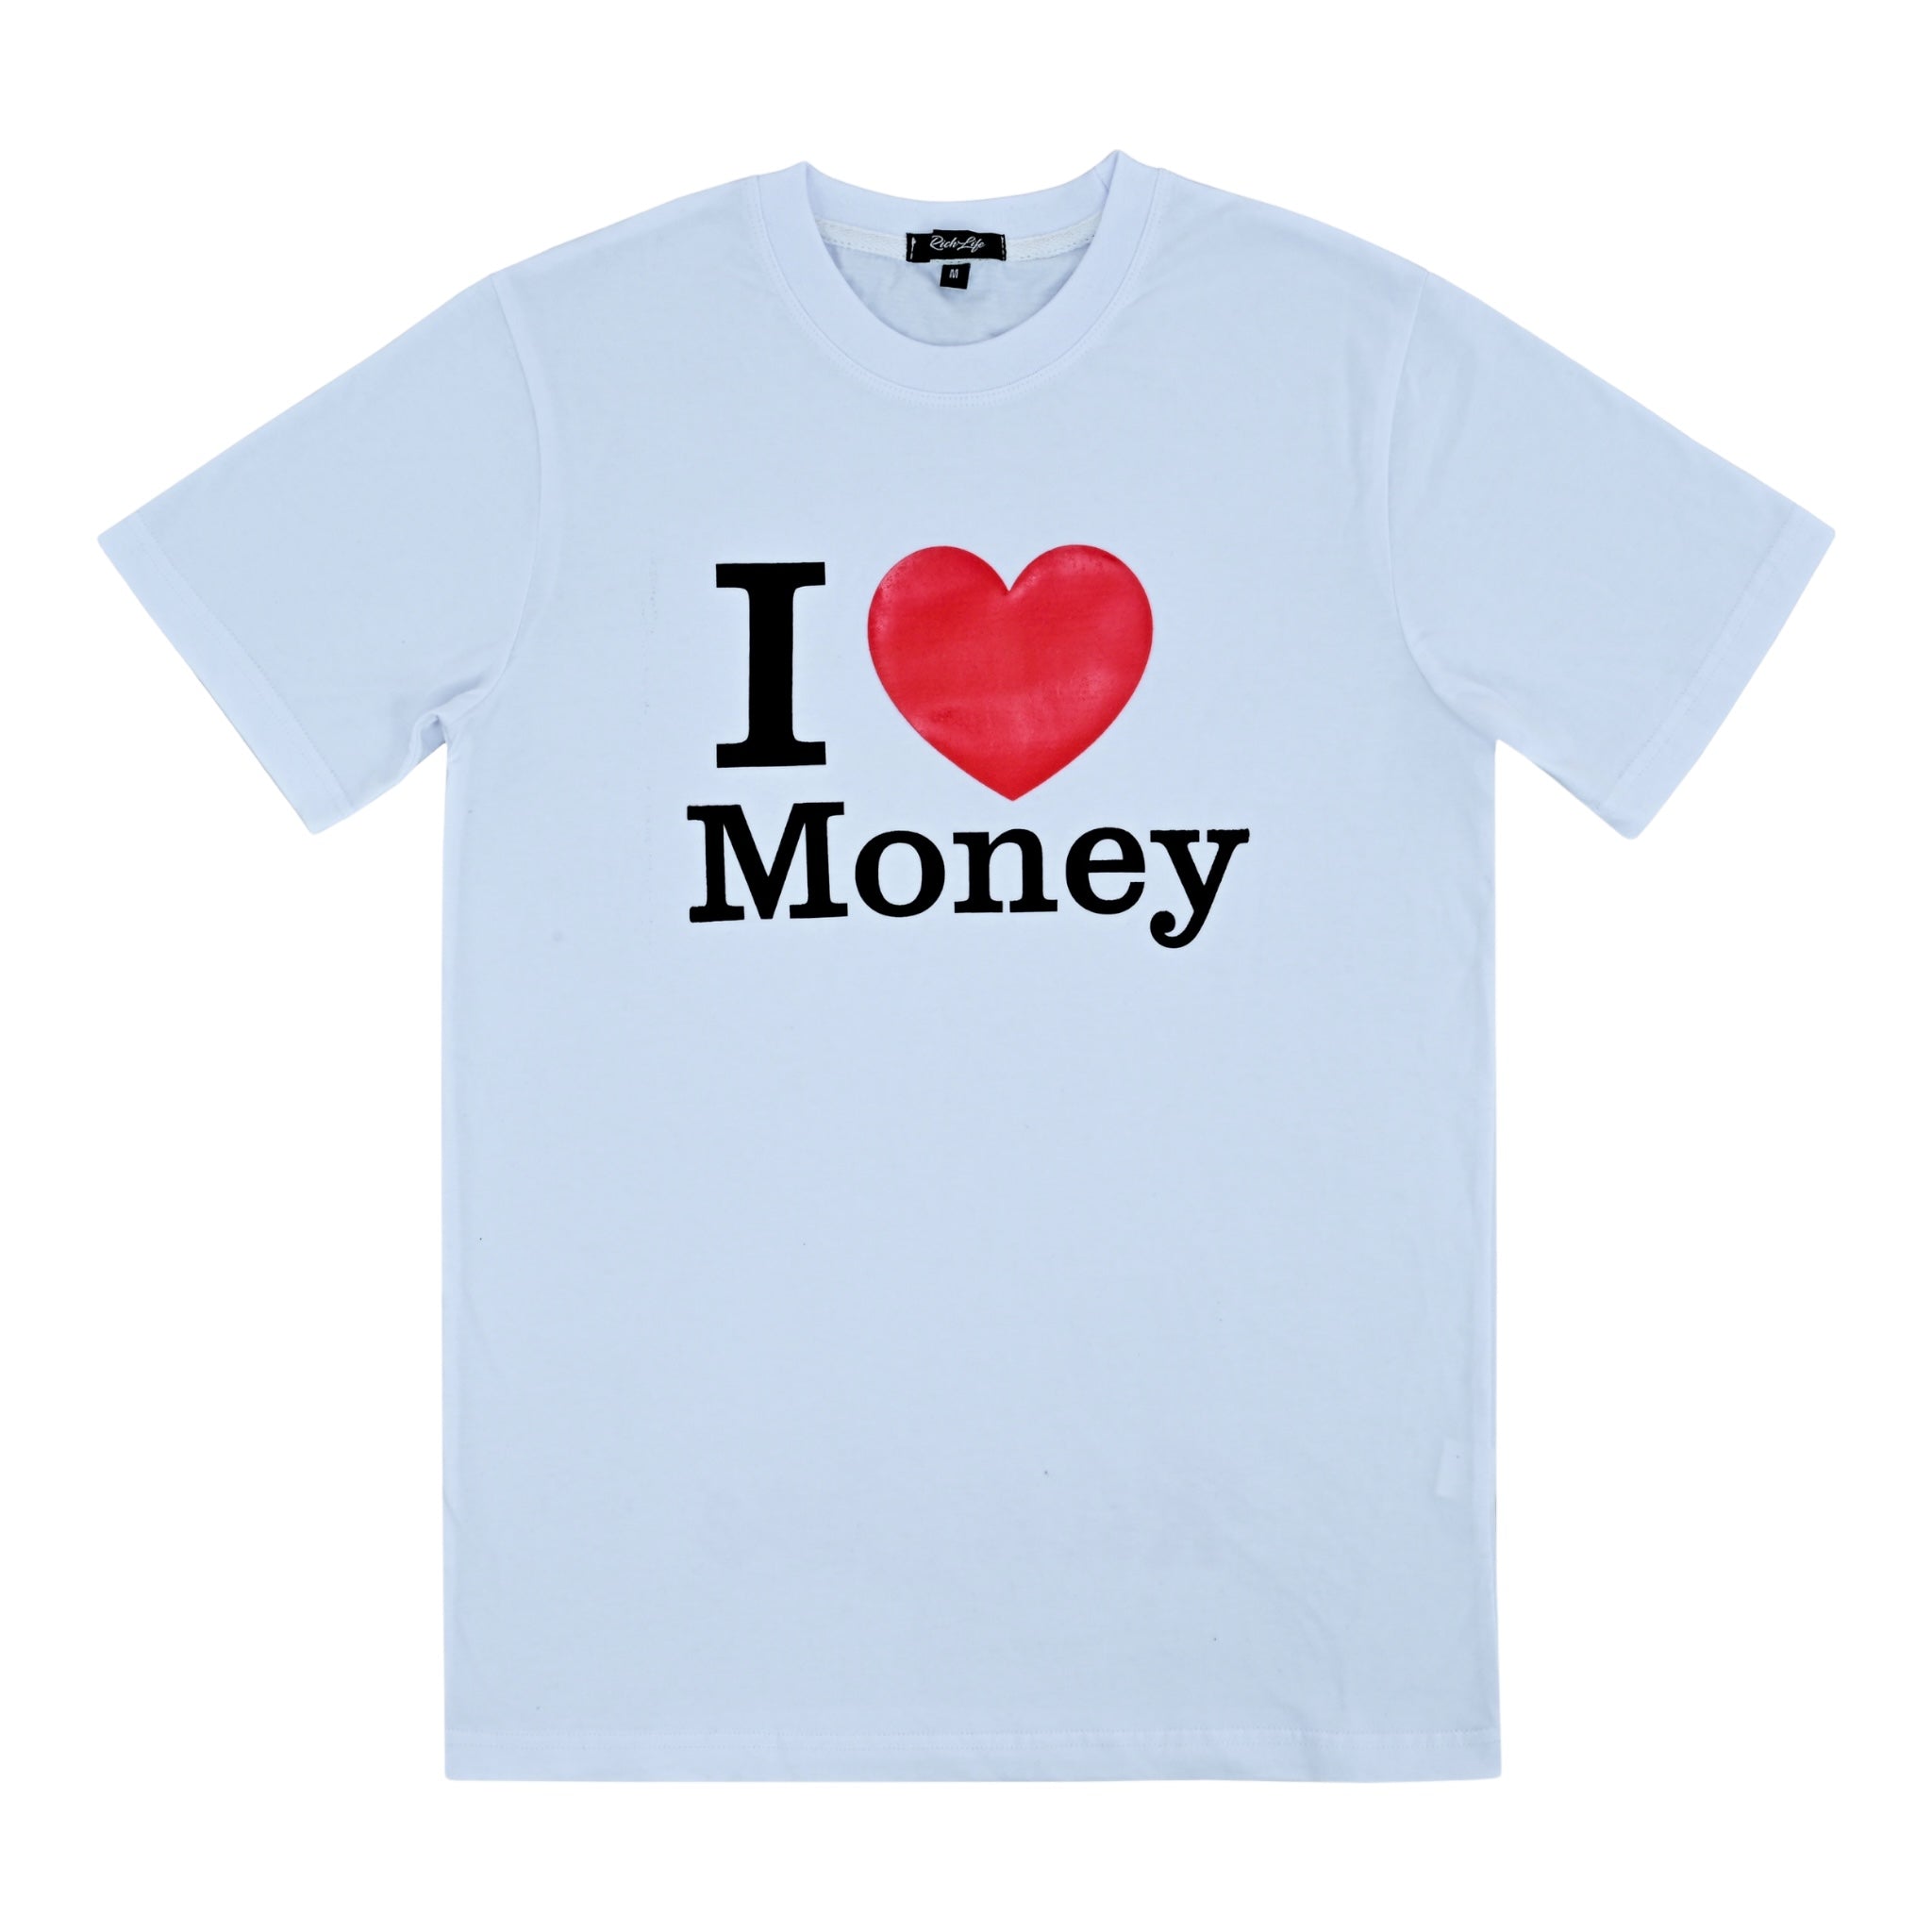 Rich Life "I love ❤️Money" T-shirt